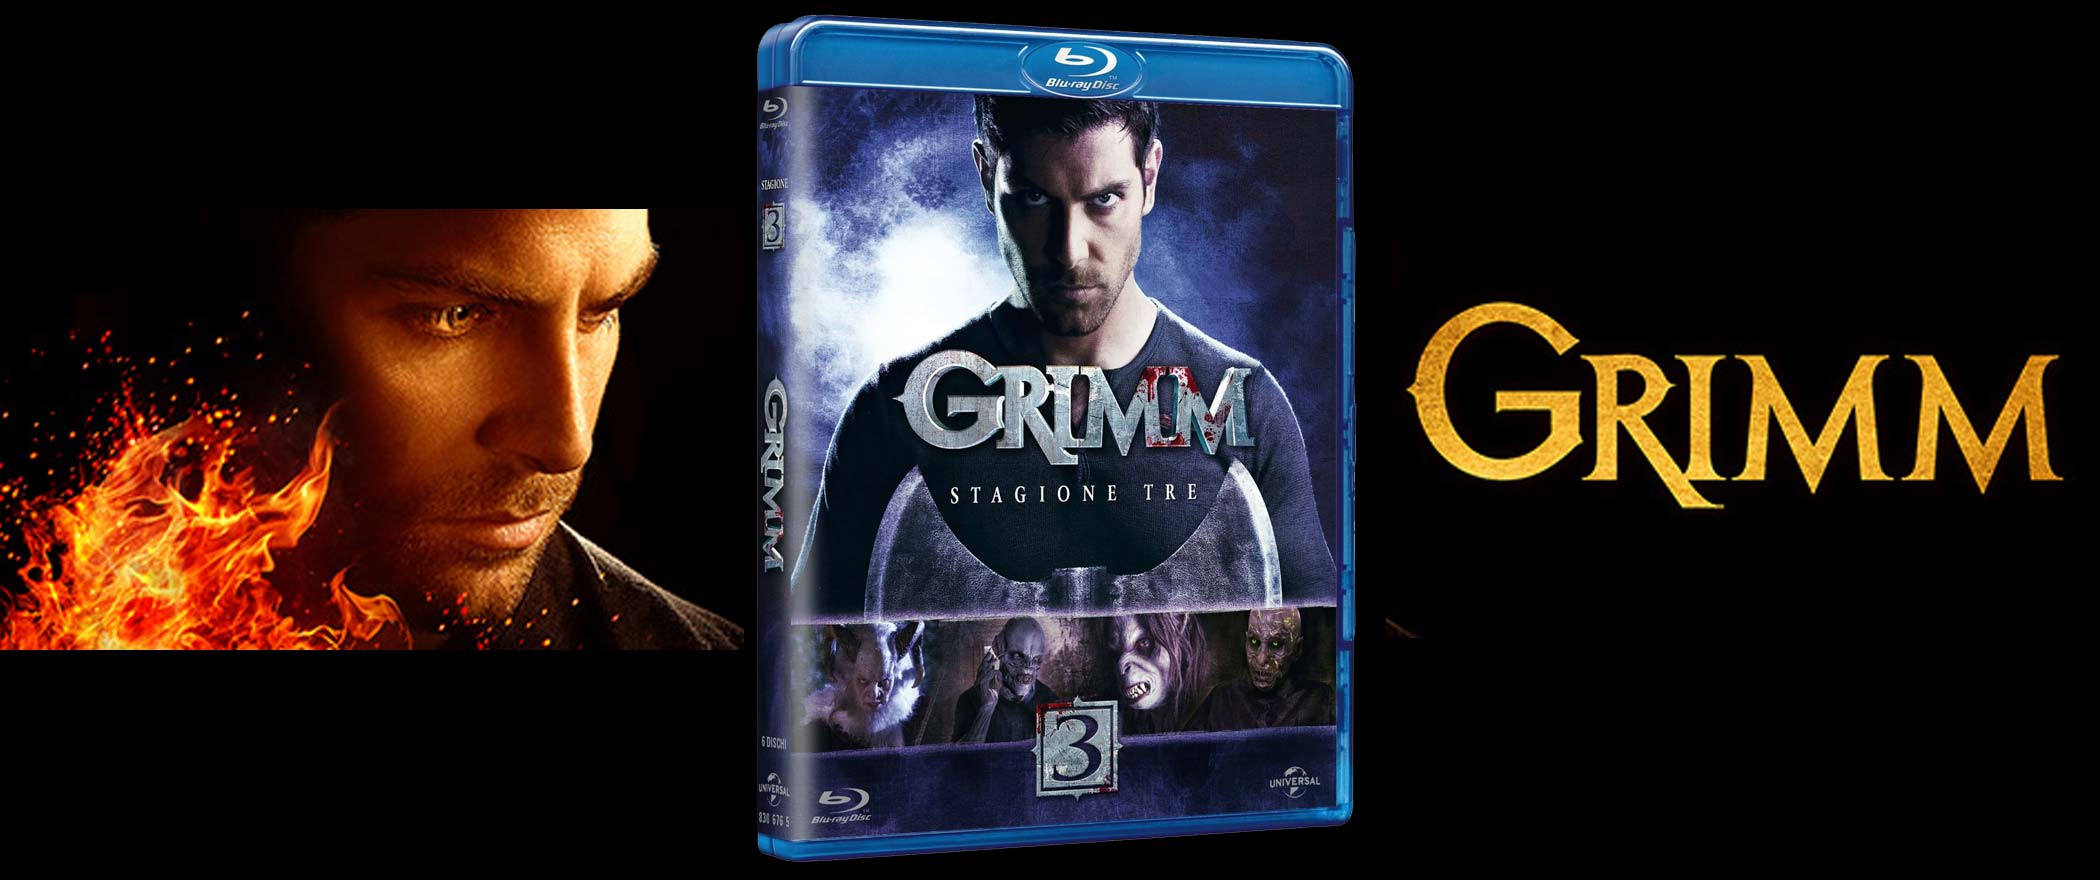 Grimm Stagione 3, recensione Blu-ray